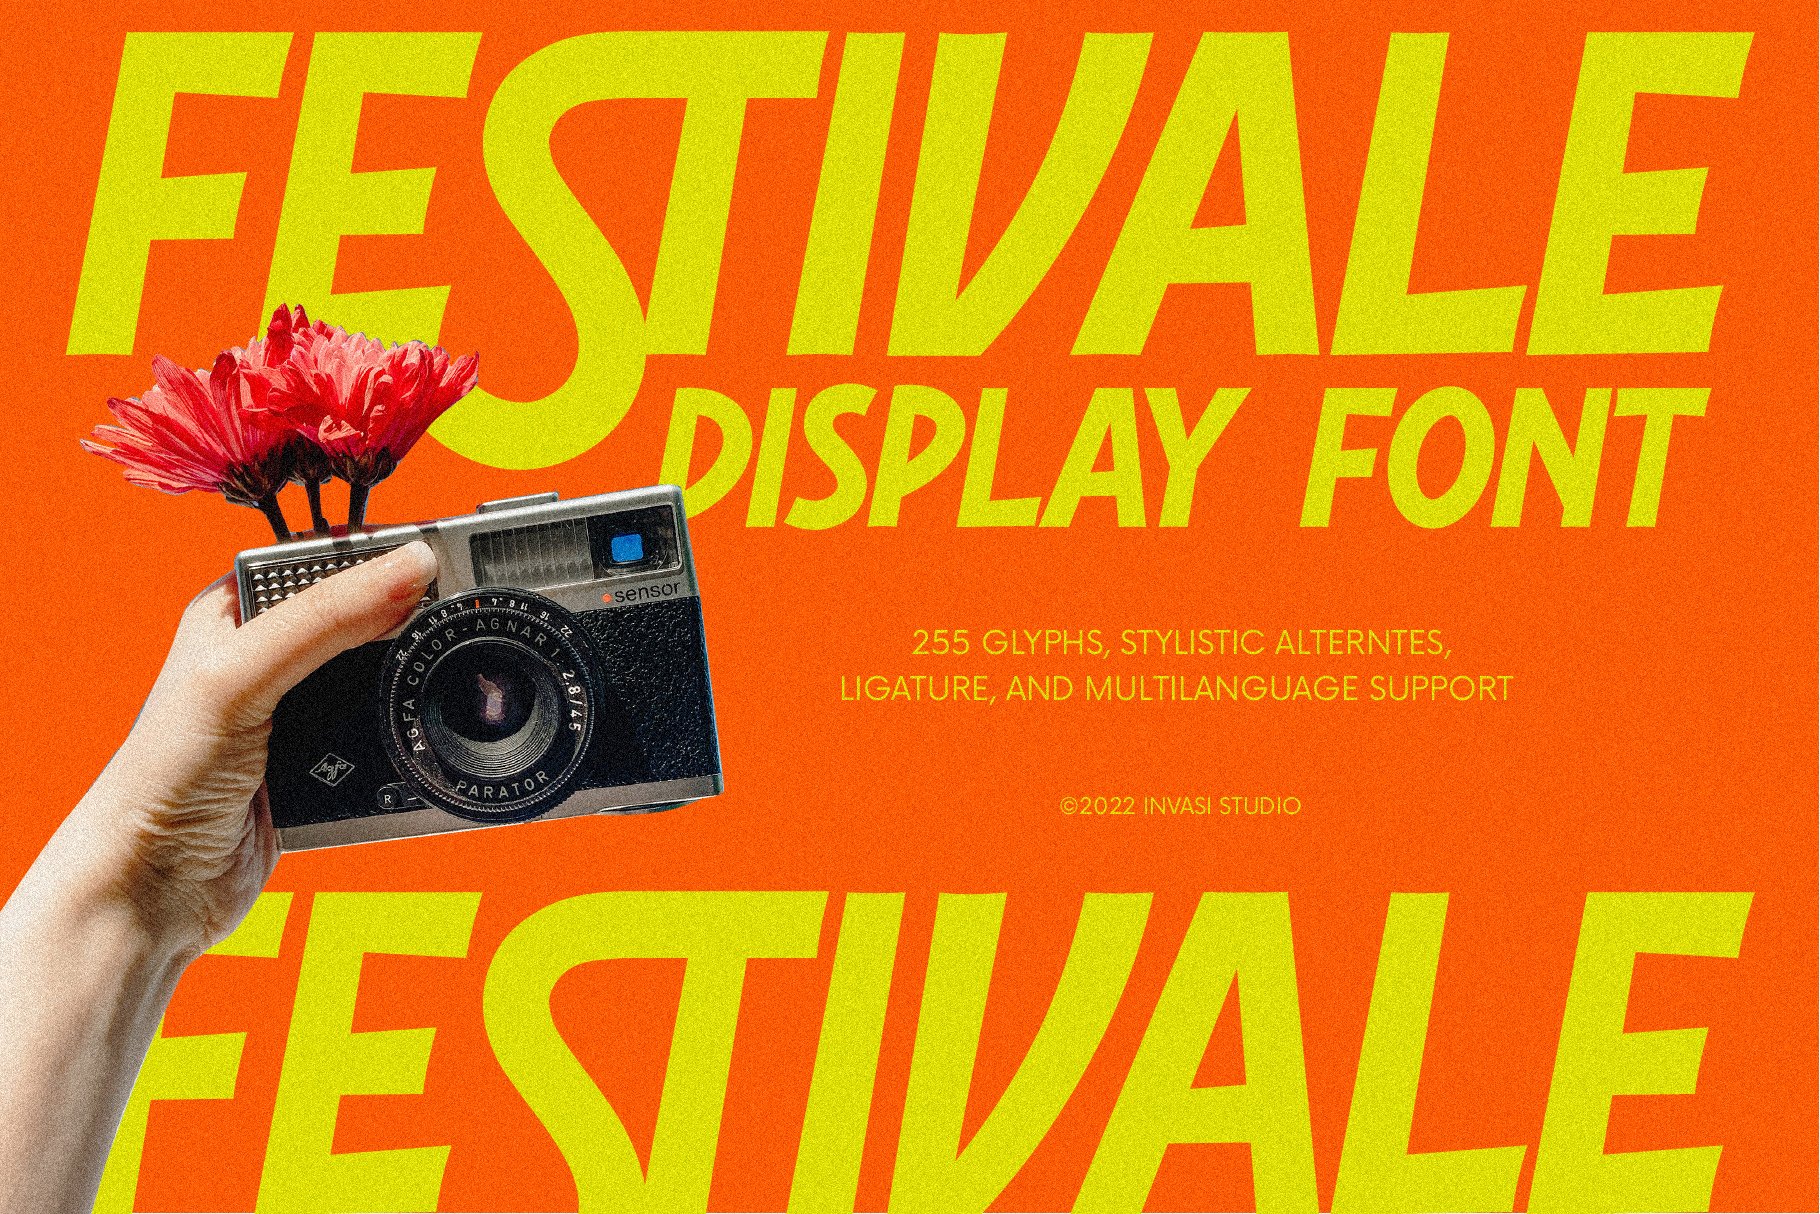 Festivale - Display Retro Sans cover image.